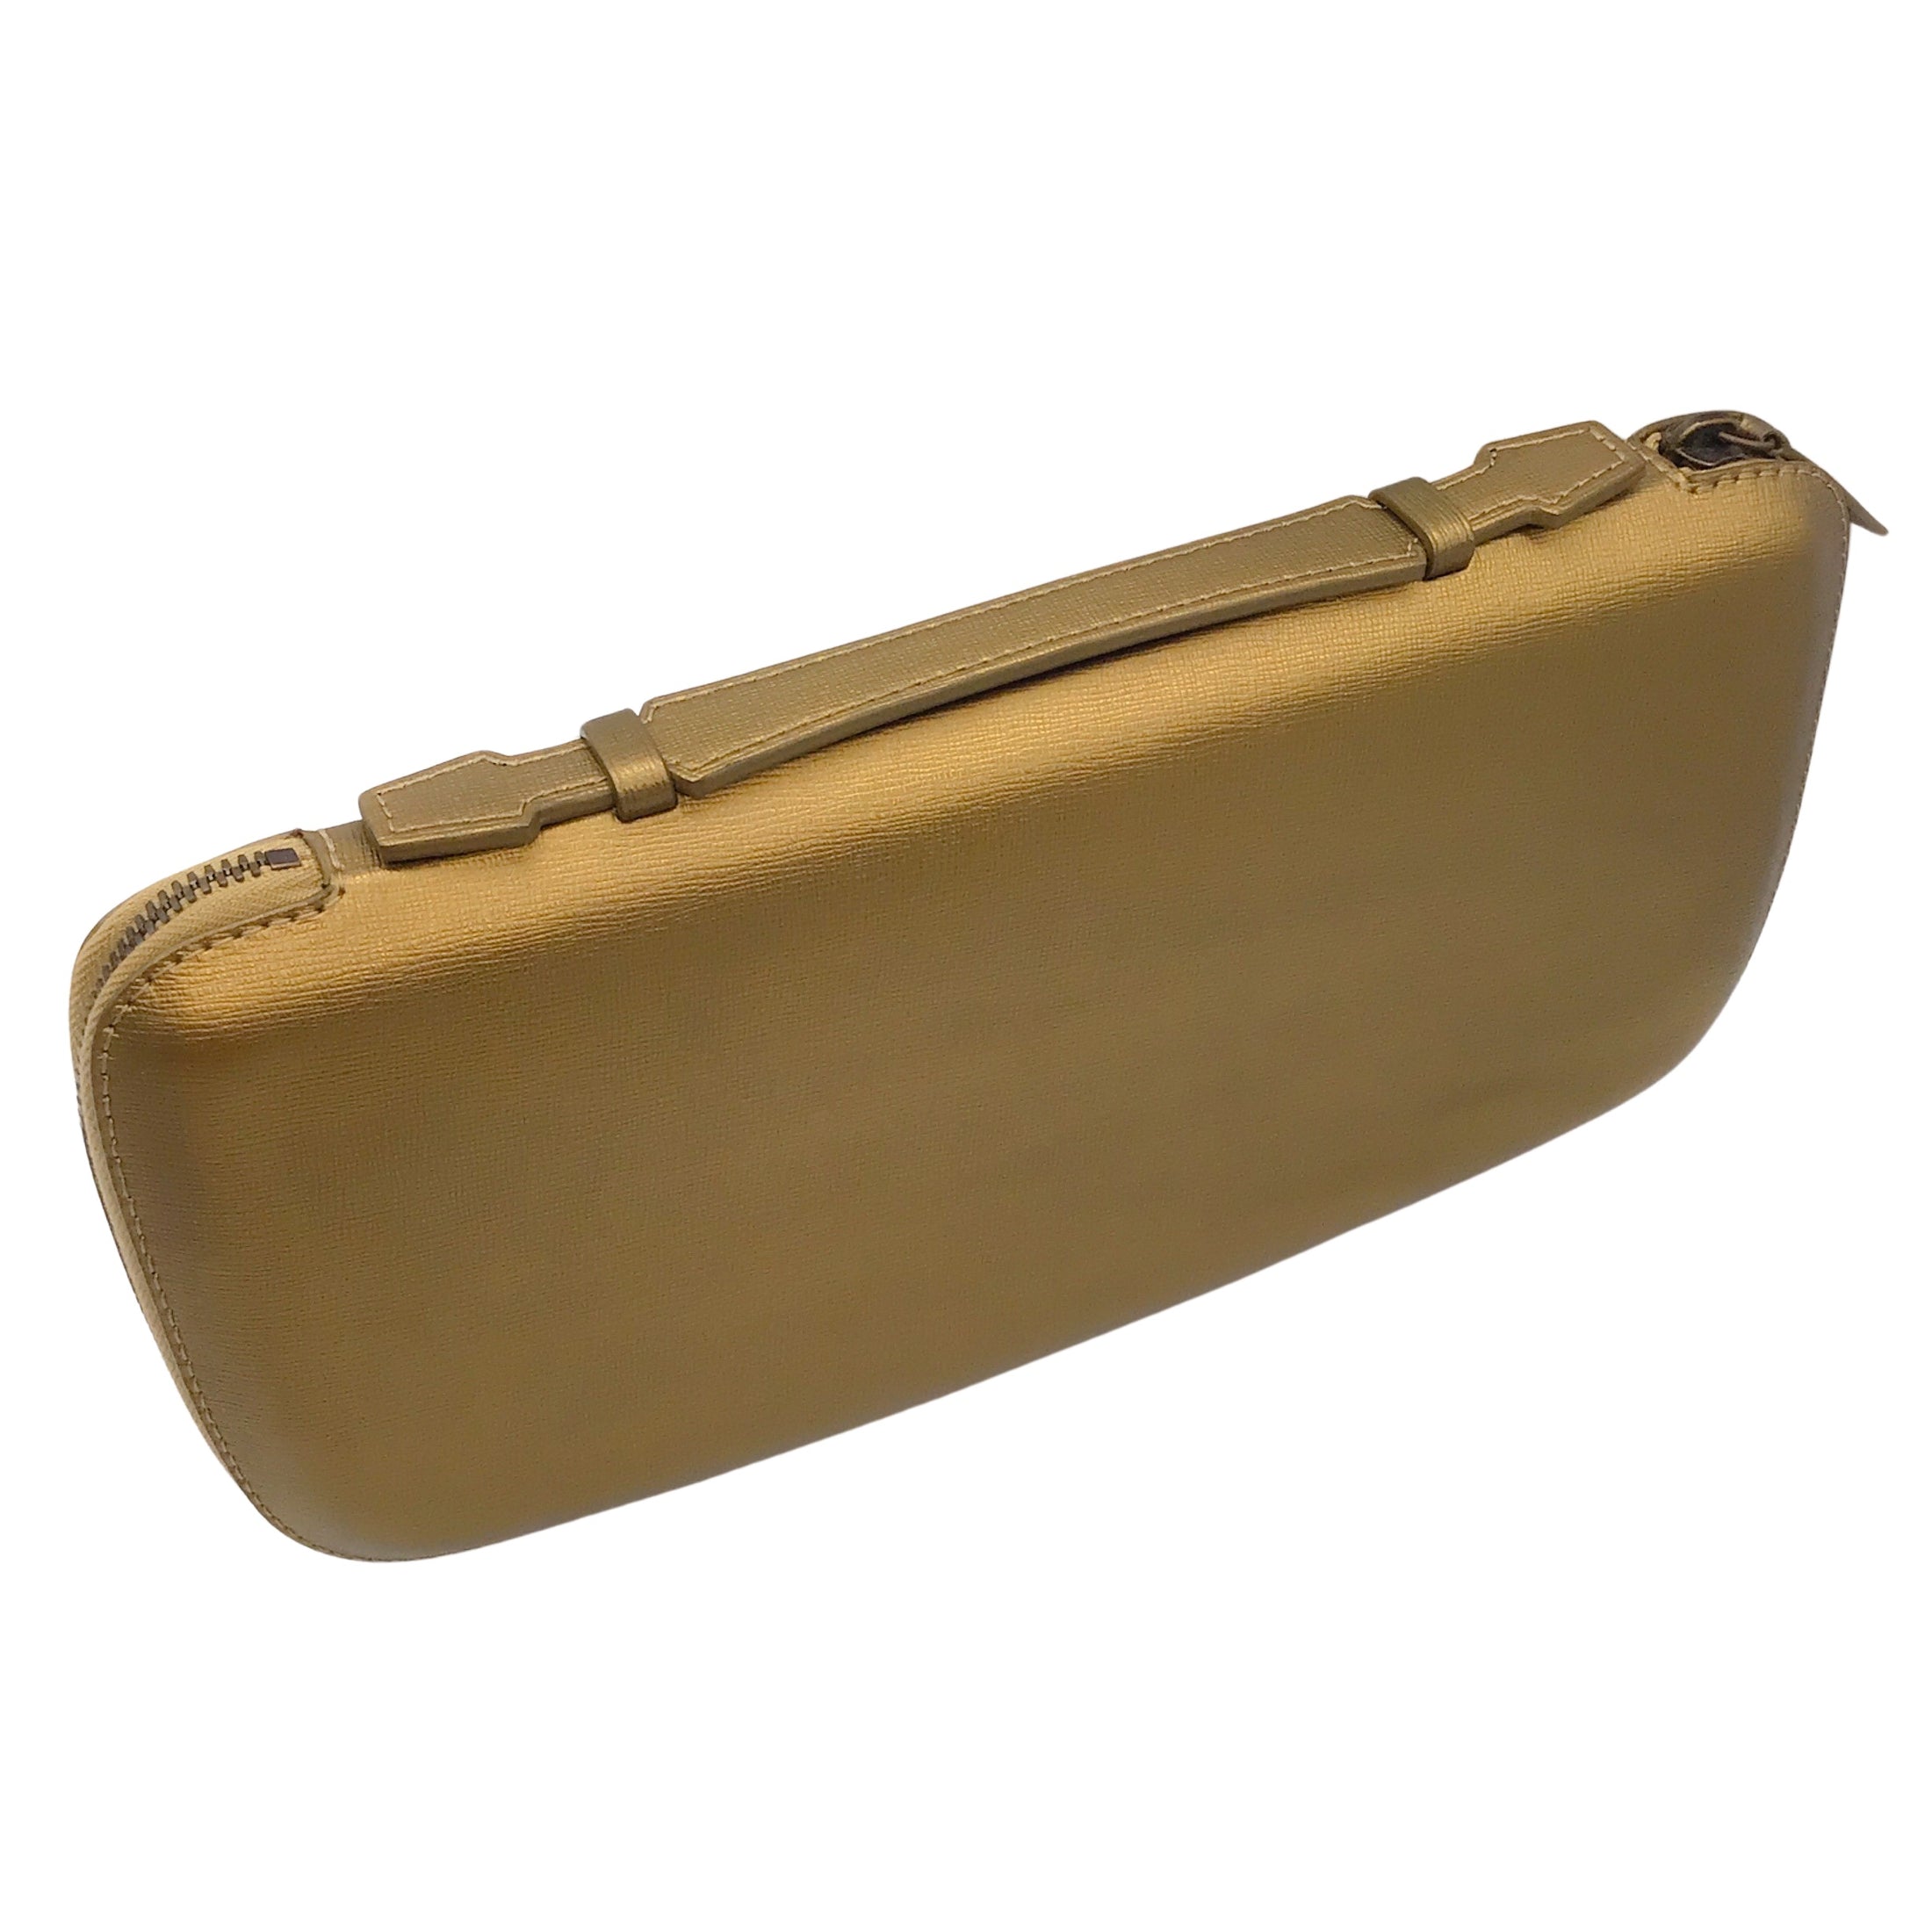 Perrin Gold Metallic Le Martha Jet-Set Leather Clutch Bag